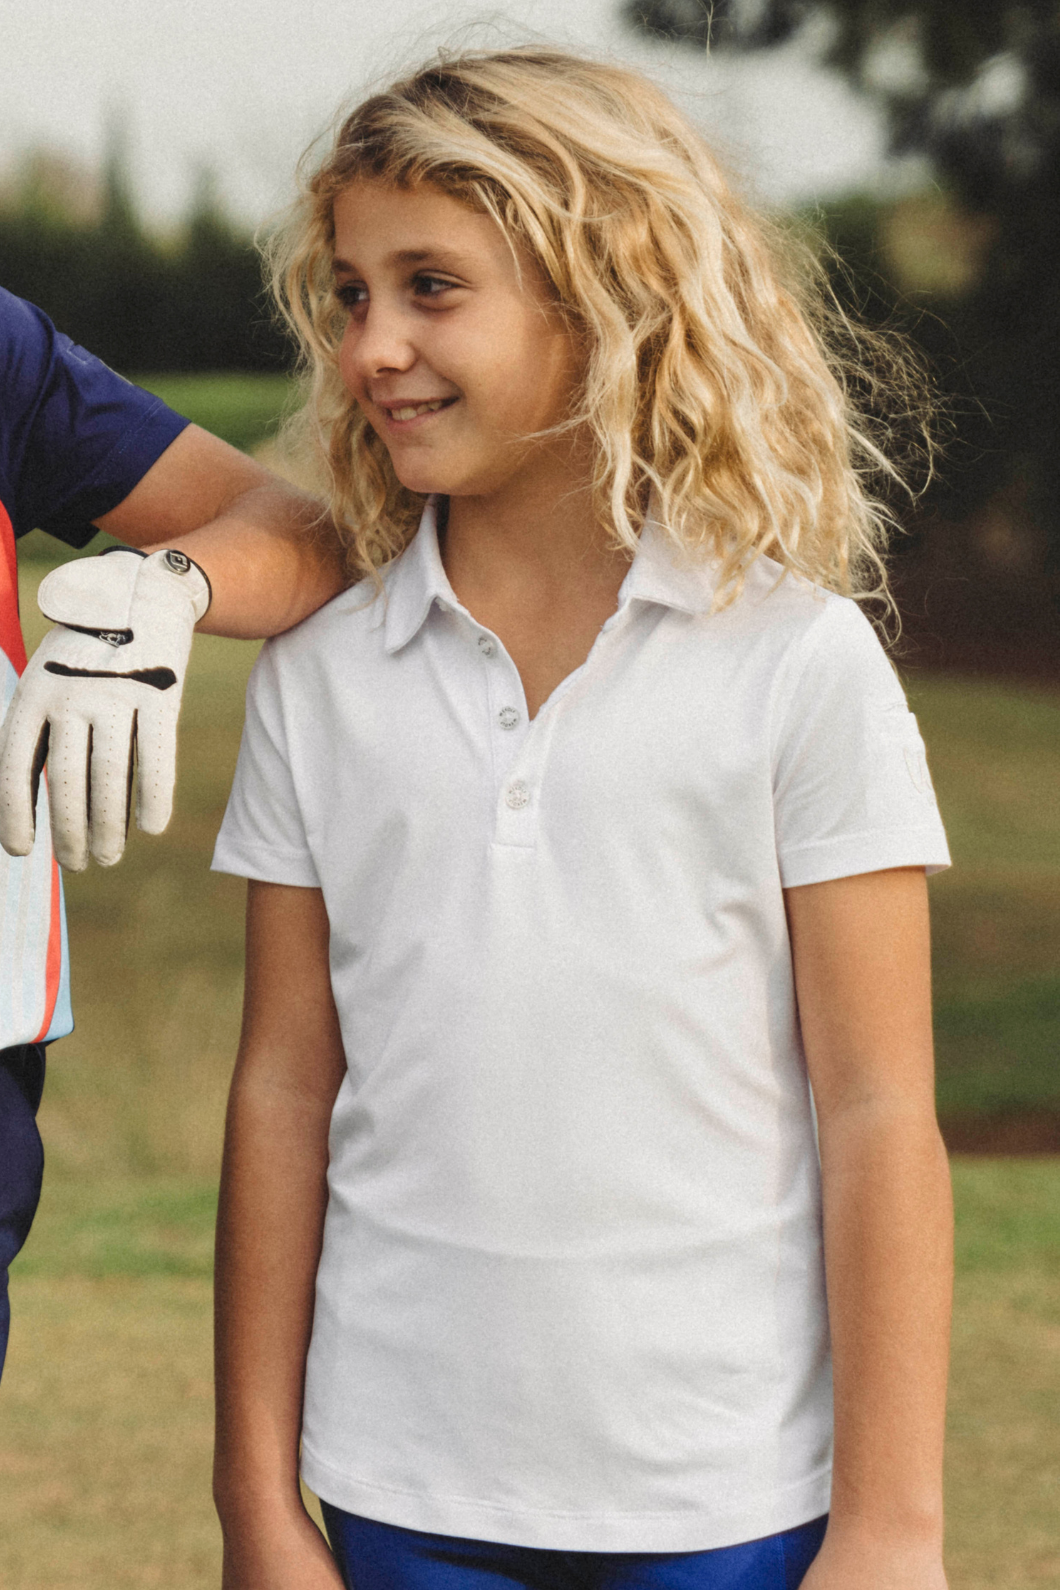 White golf polo shirt for girls